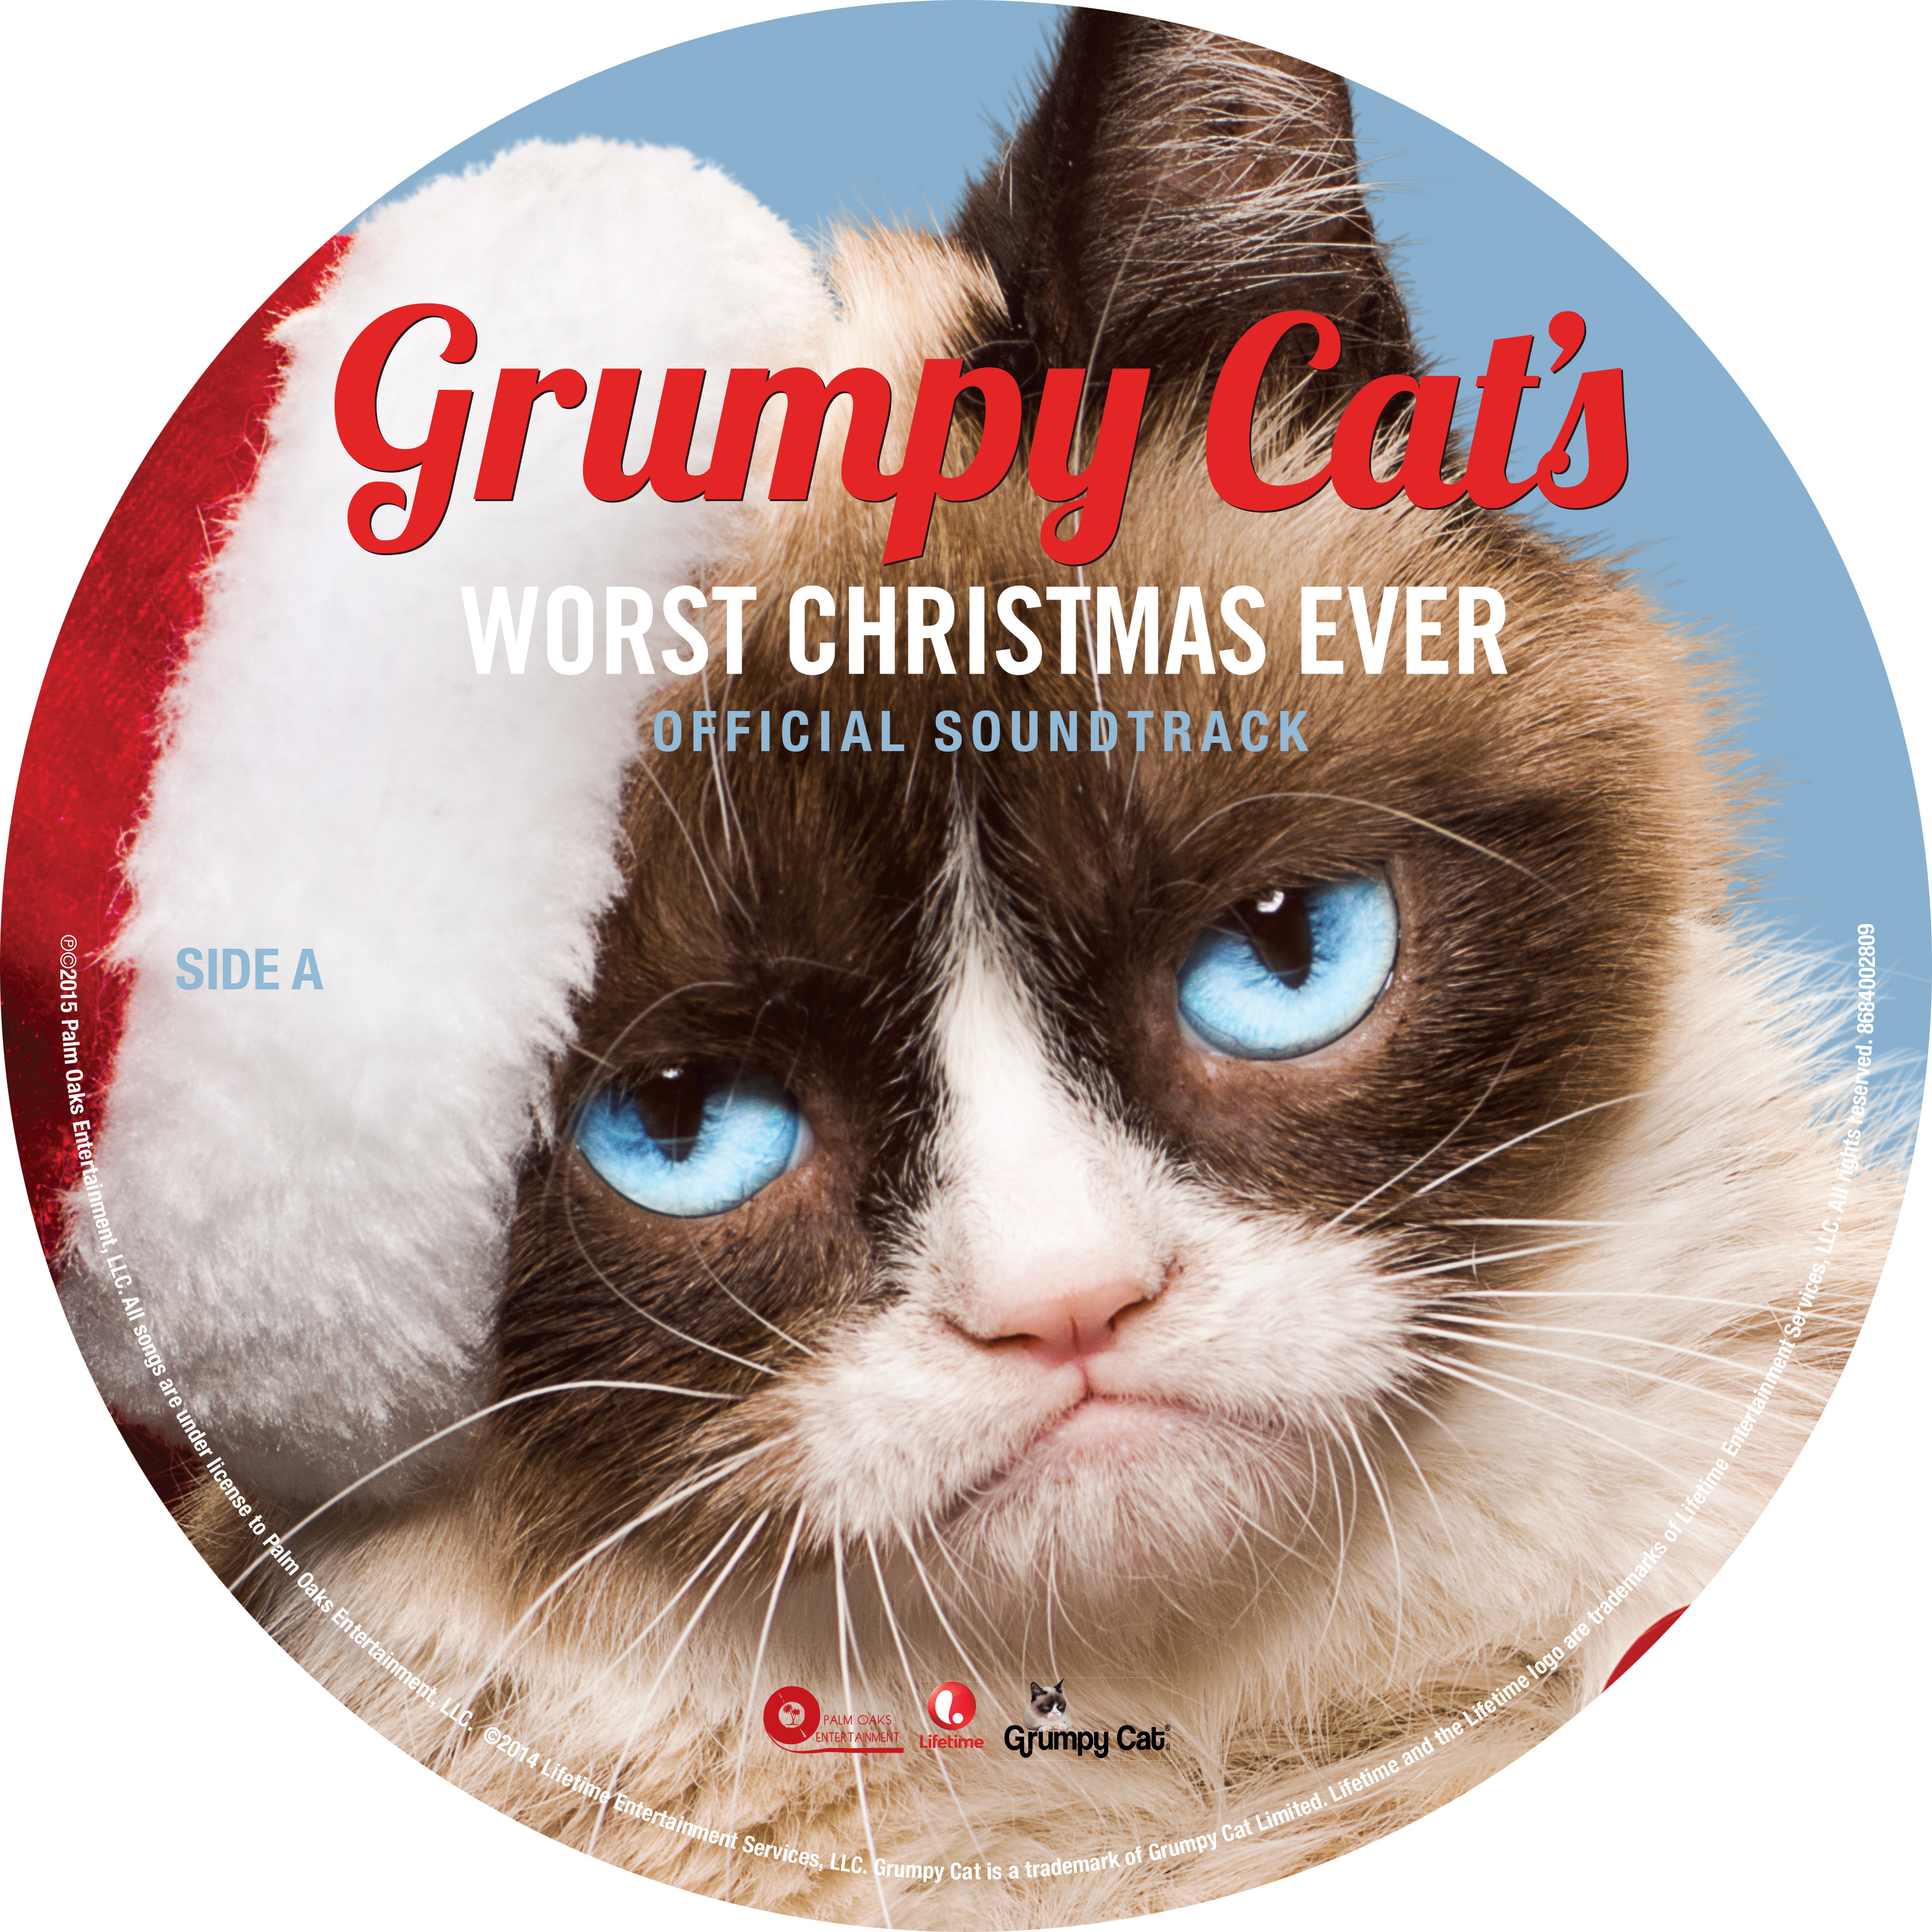 Grumpy Cat's Debut Picture-Vinyl Release Launches with PledgeMusic - PR.com